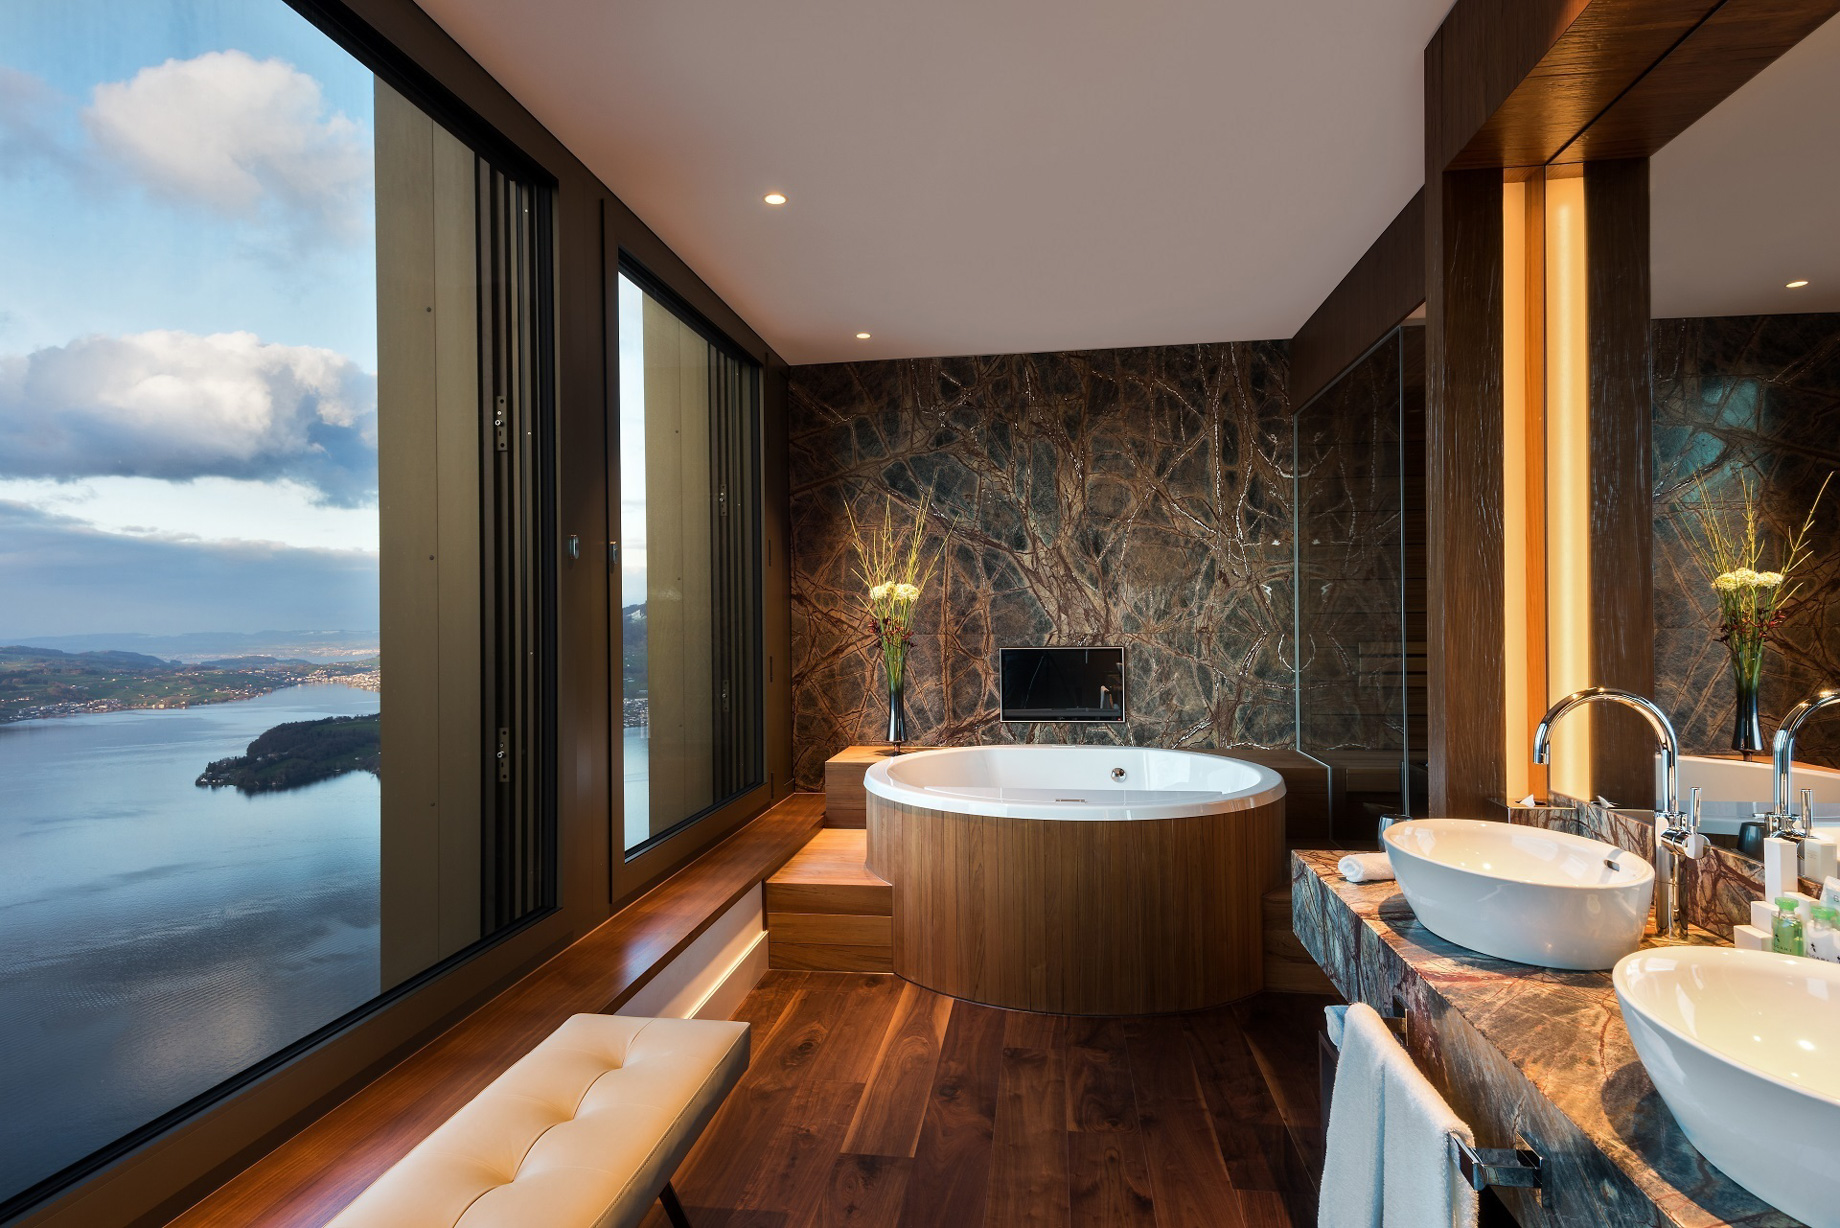 Burgenstock Hotel & Alpine Spa - Obburgen, Switzerland - Royal Suite Bathroom View